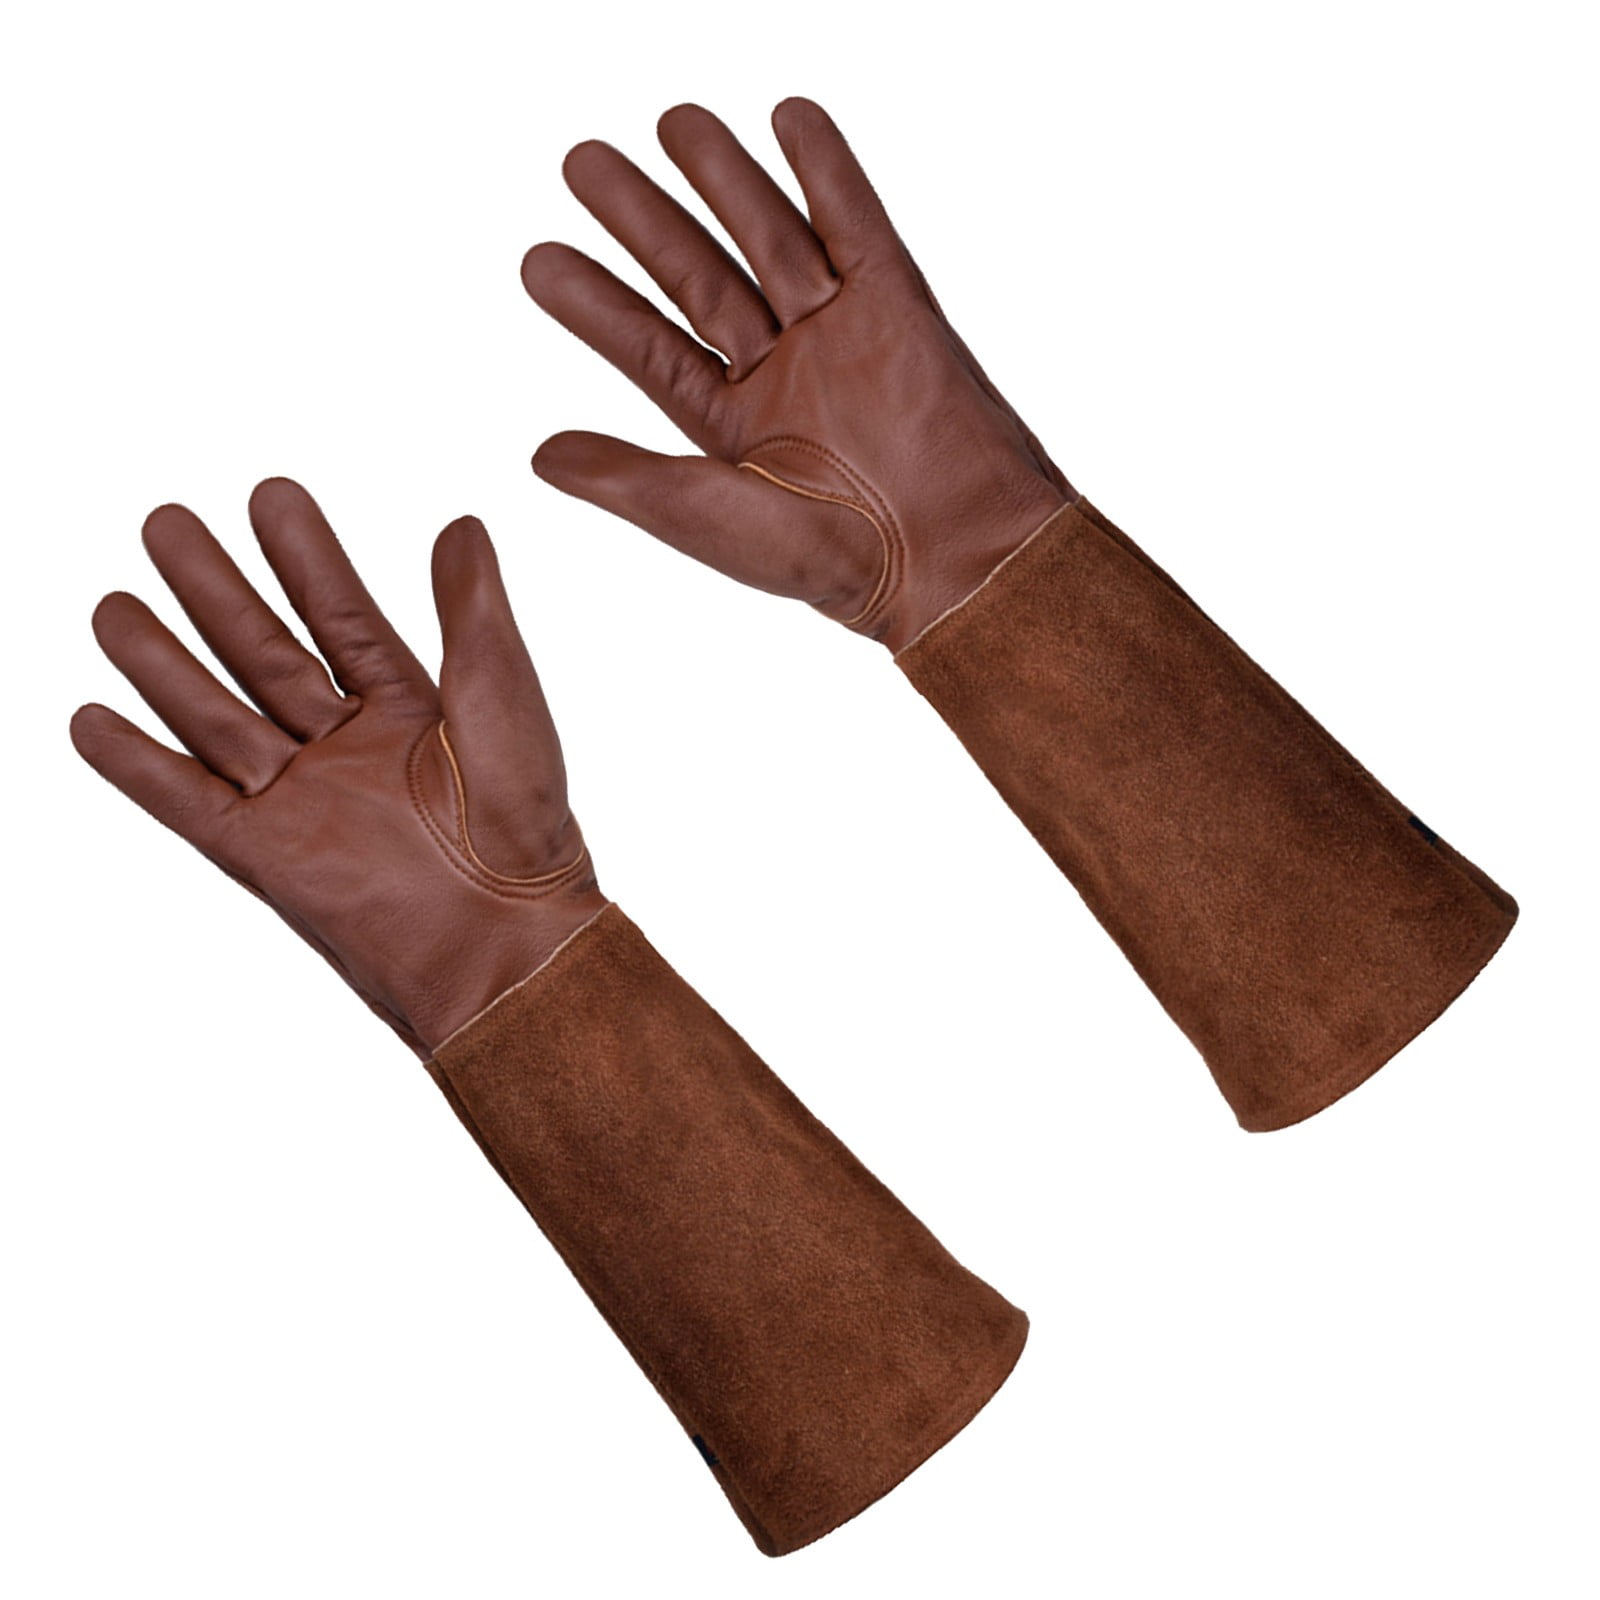 Blue Slim L fit Work Gloves,Super Thin Touch Screen Gloves Thorn-proof Gardening Gloves for Women/Men Ideal for Garden & Househoold Tasks,Safe for Pruning Roses